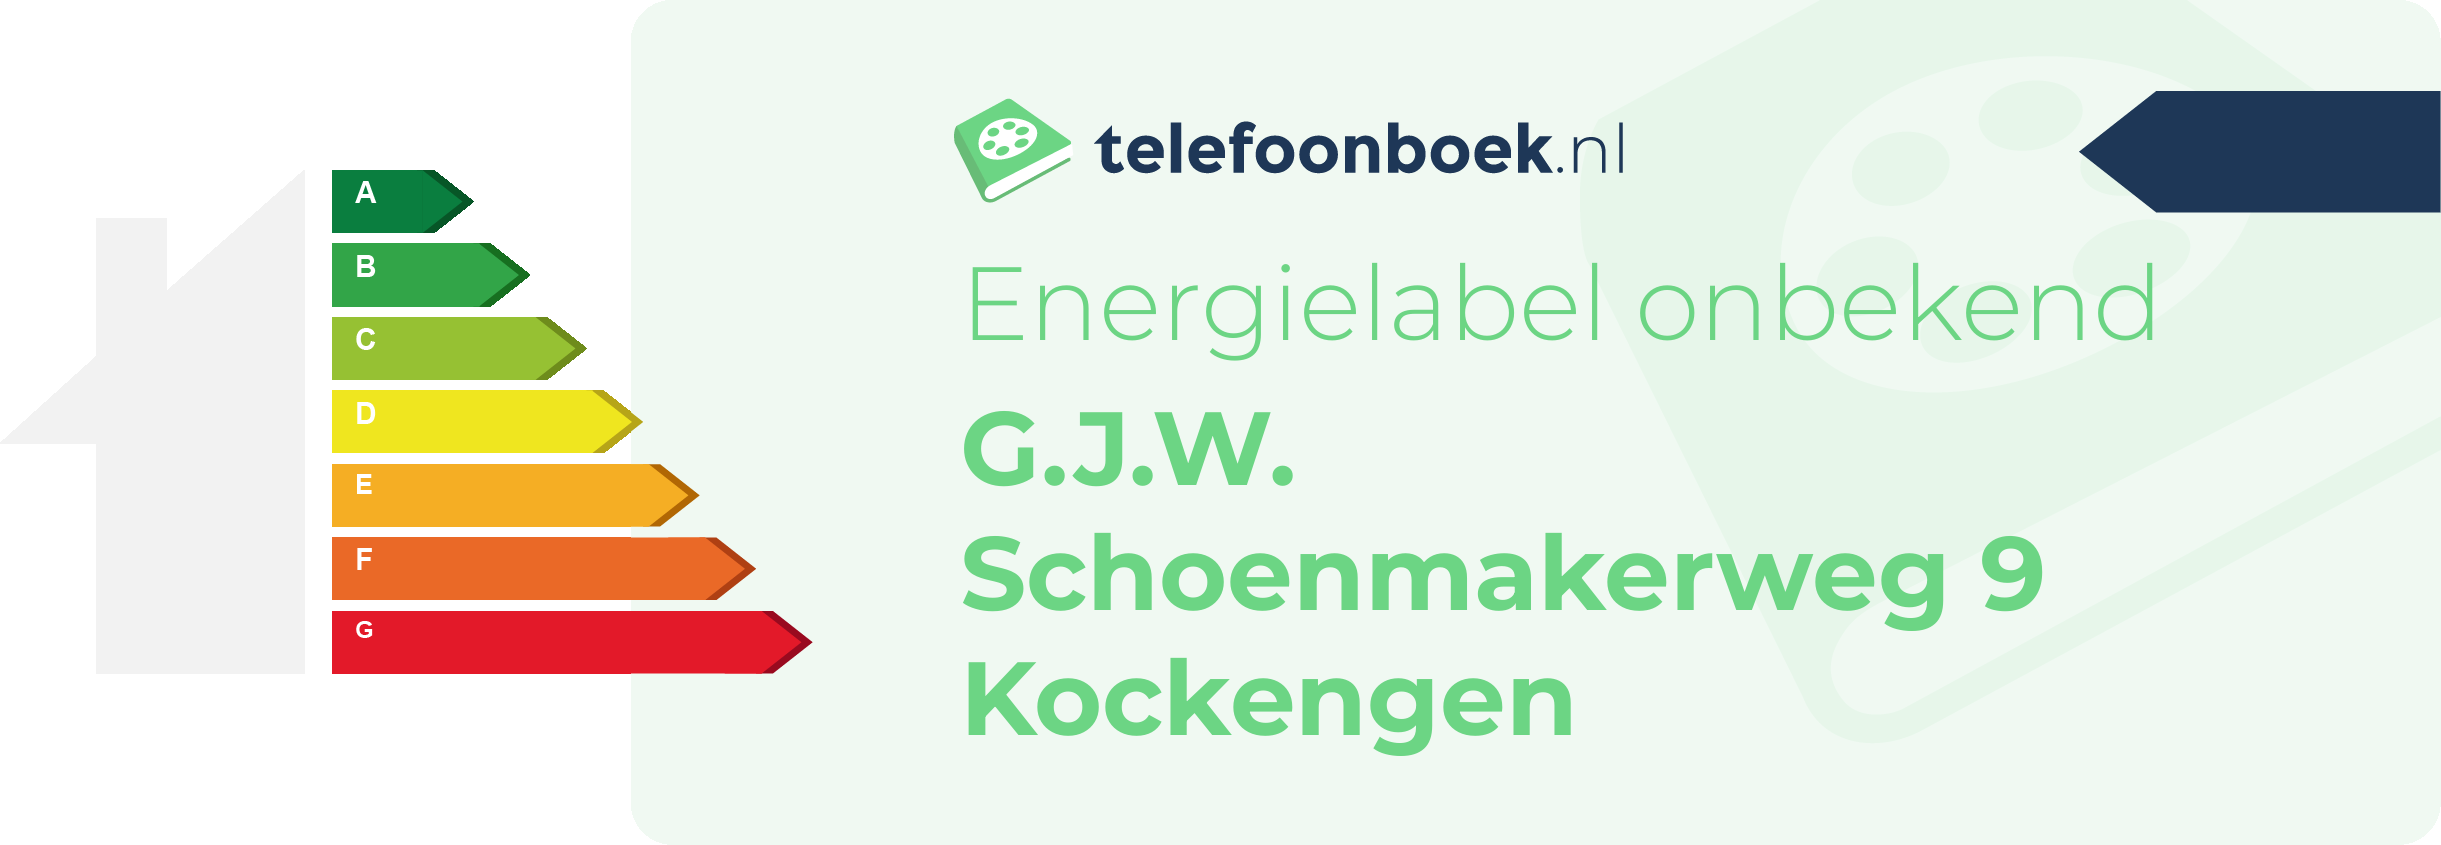 Energielabel G.J.W. Schoenmakerweg 9 Kockengen